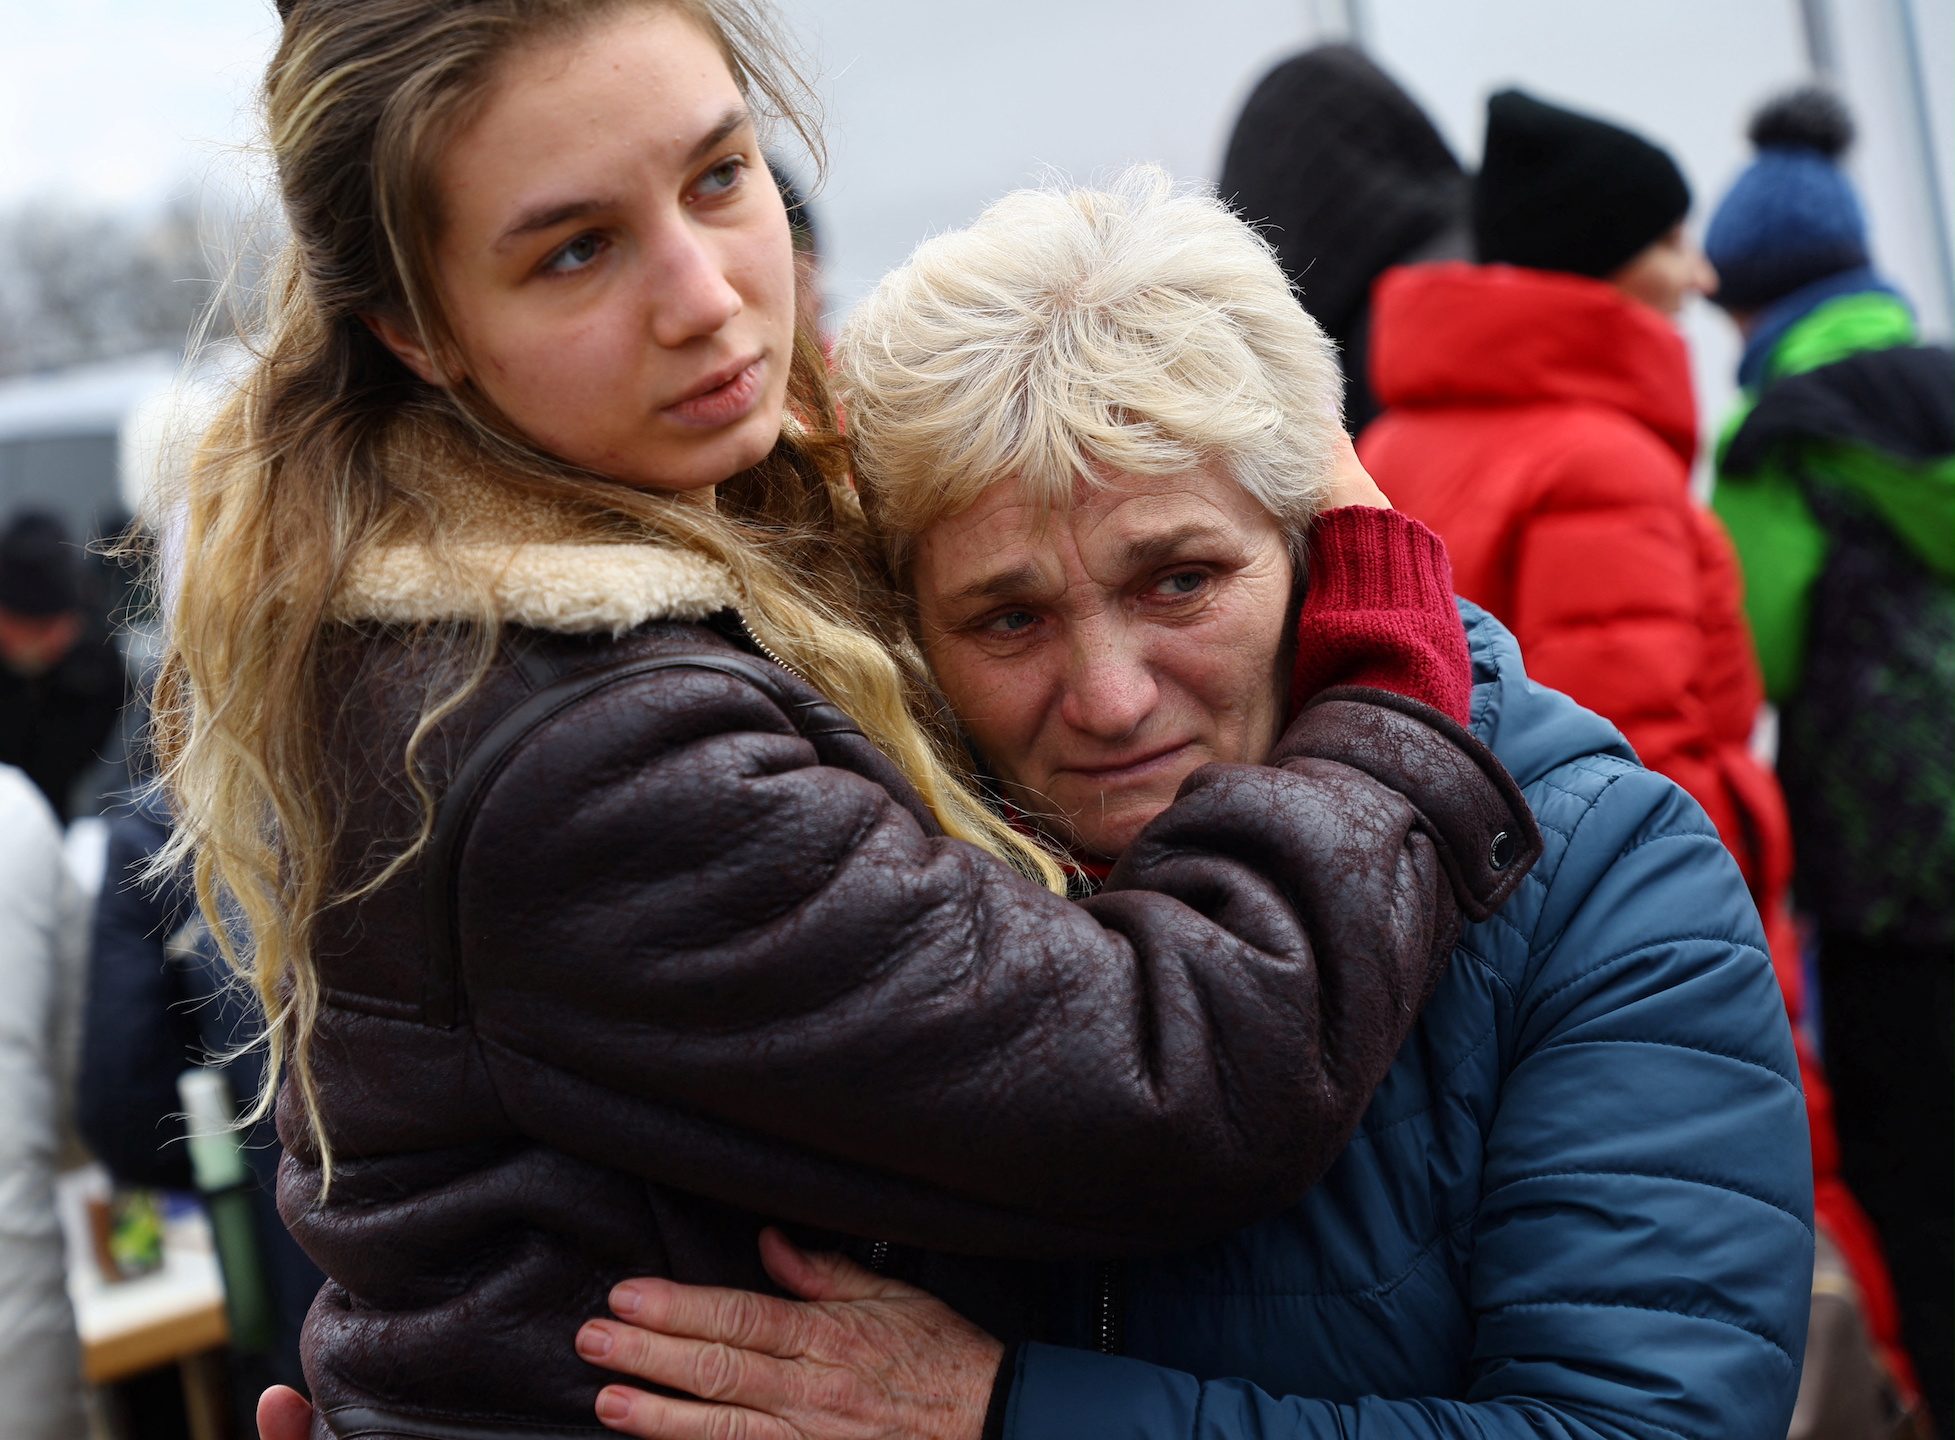 Host nations boost aid effort as thousands more Ukrainians flee across borders